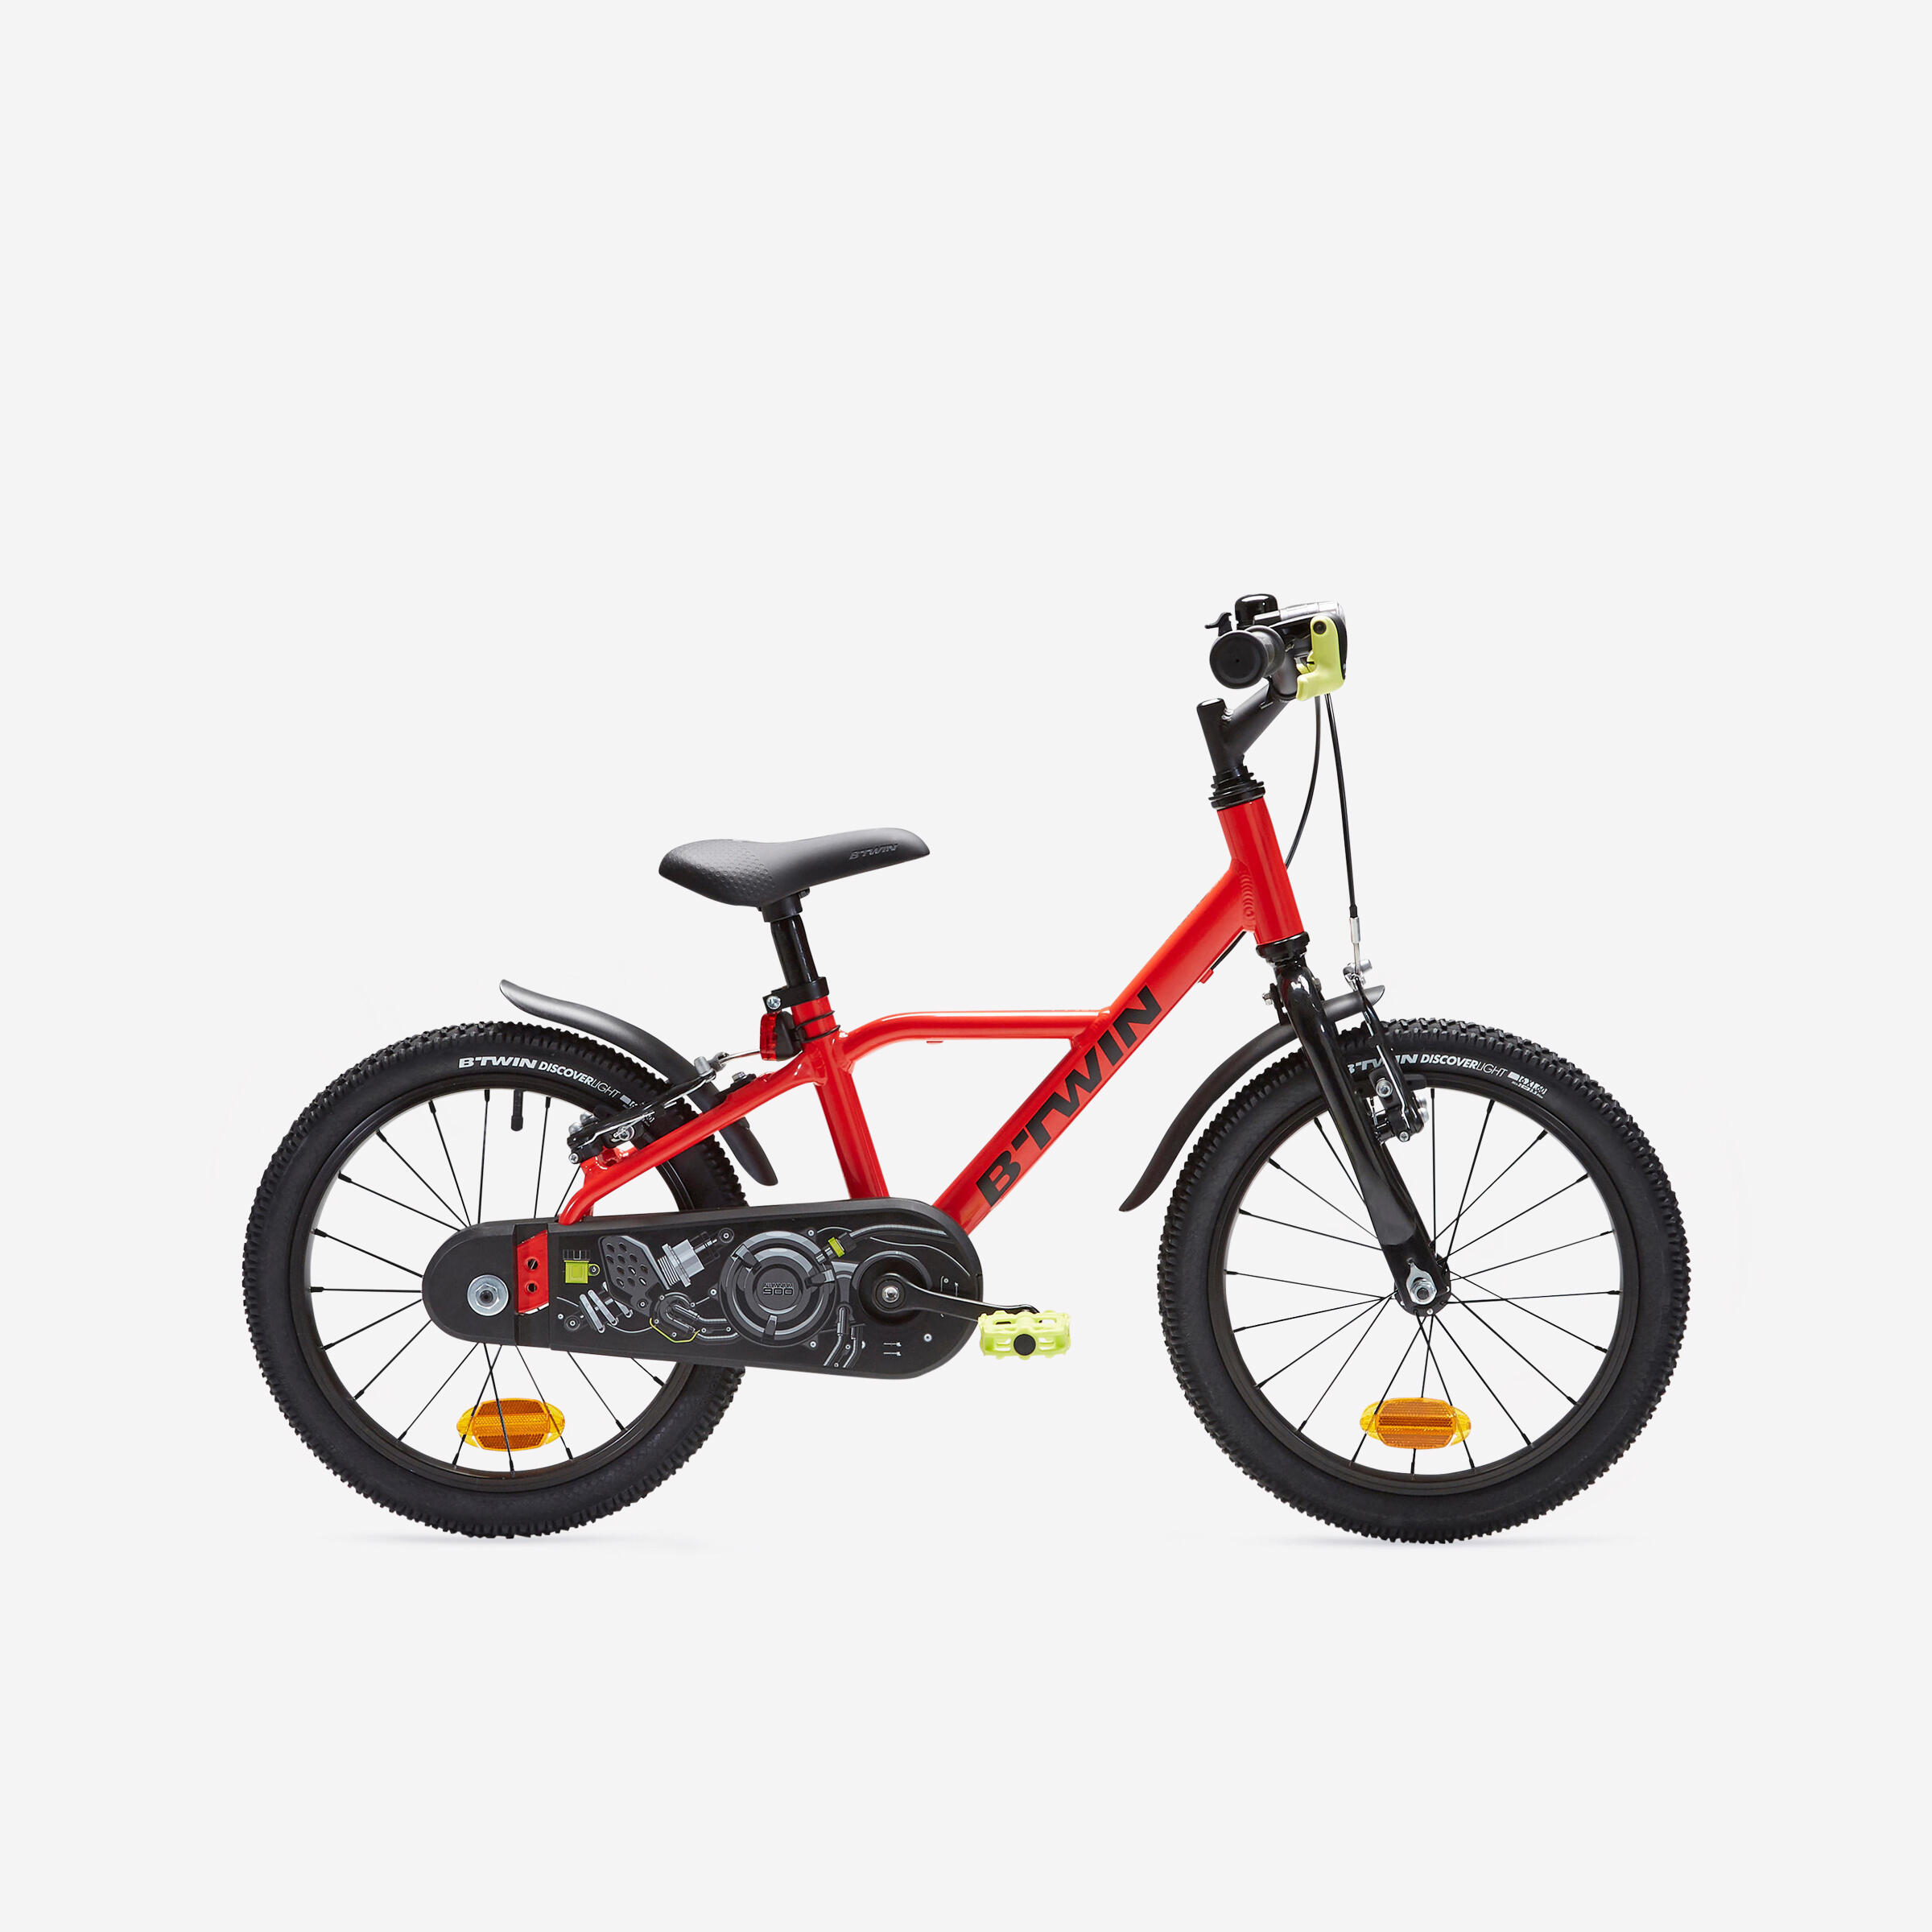 Kids' 16-inch, chain guard, easy-braking bike, red 1/11